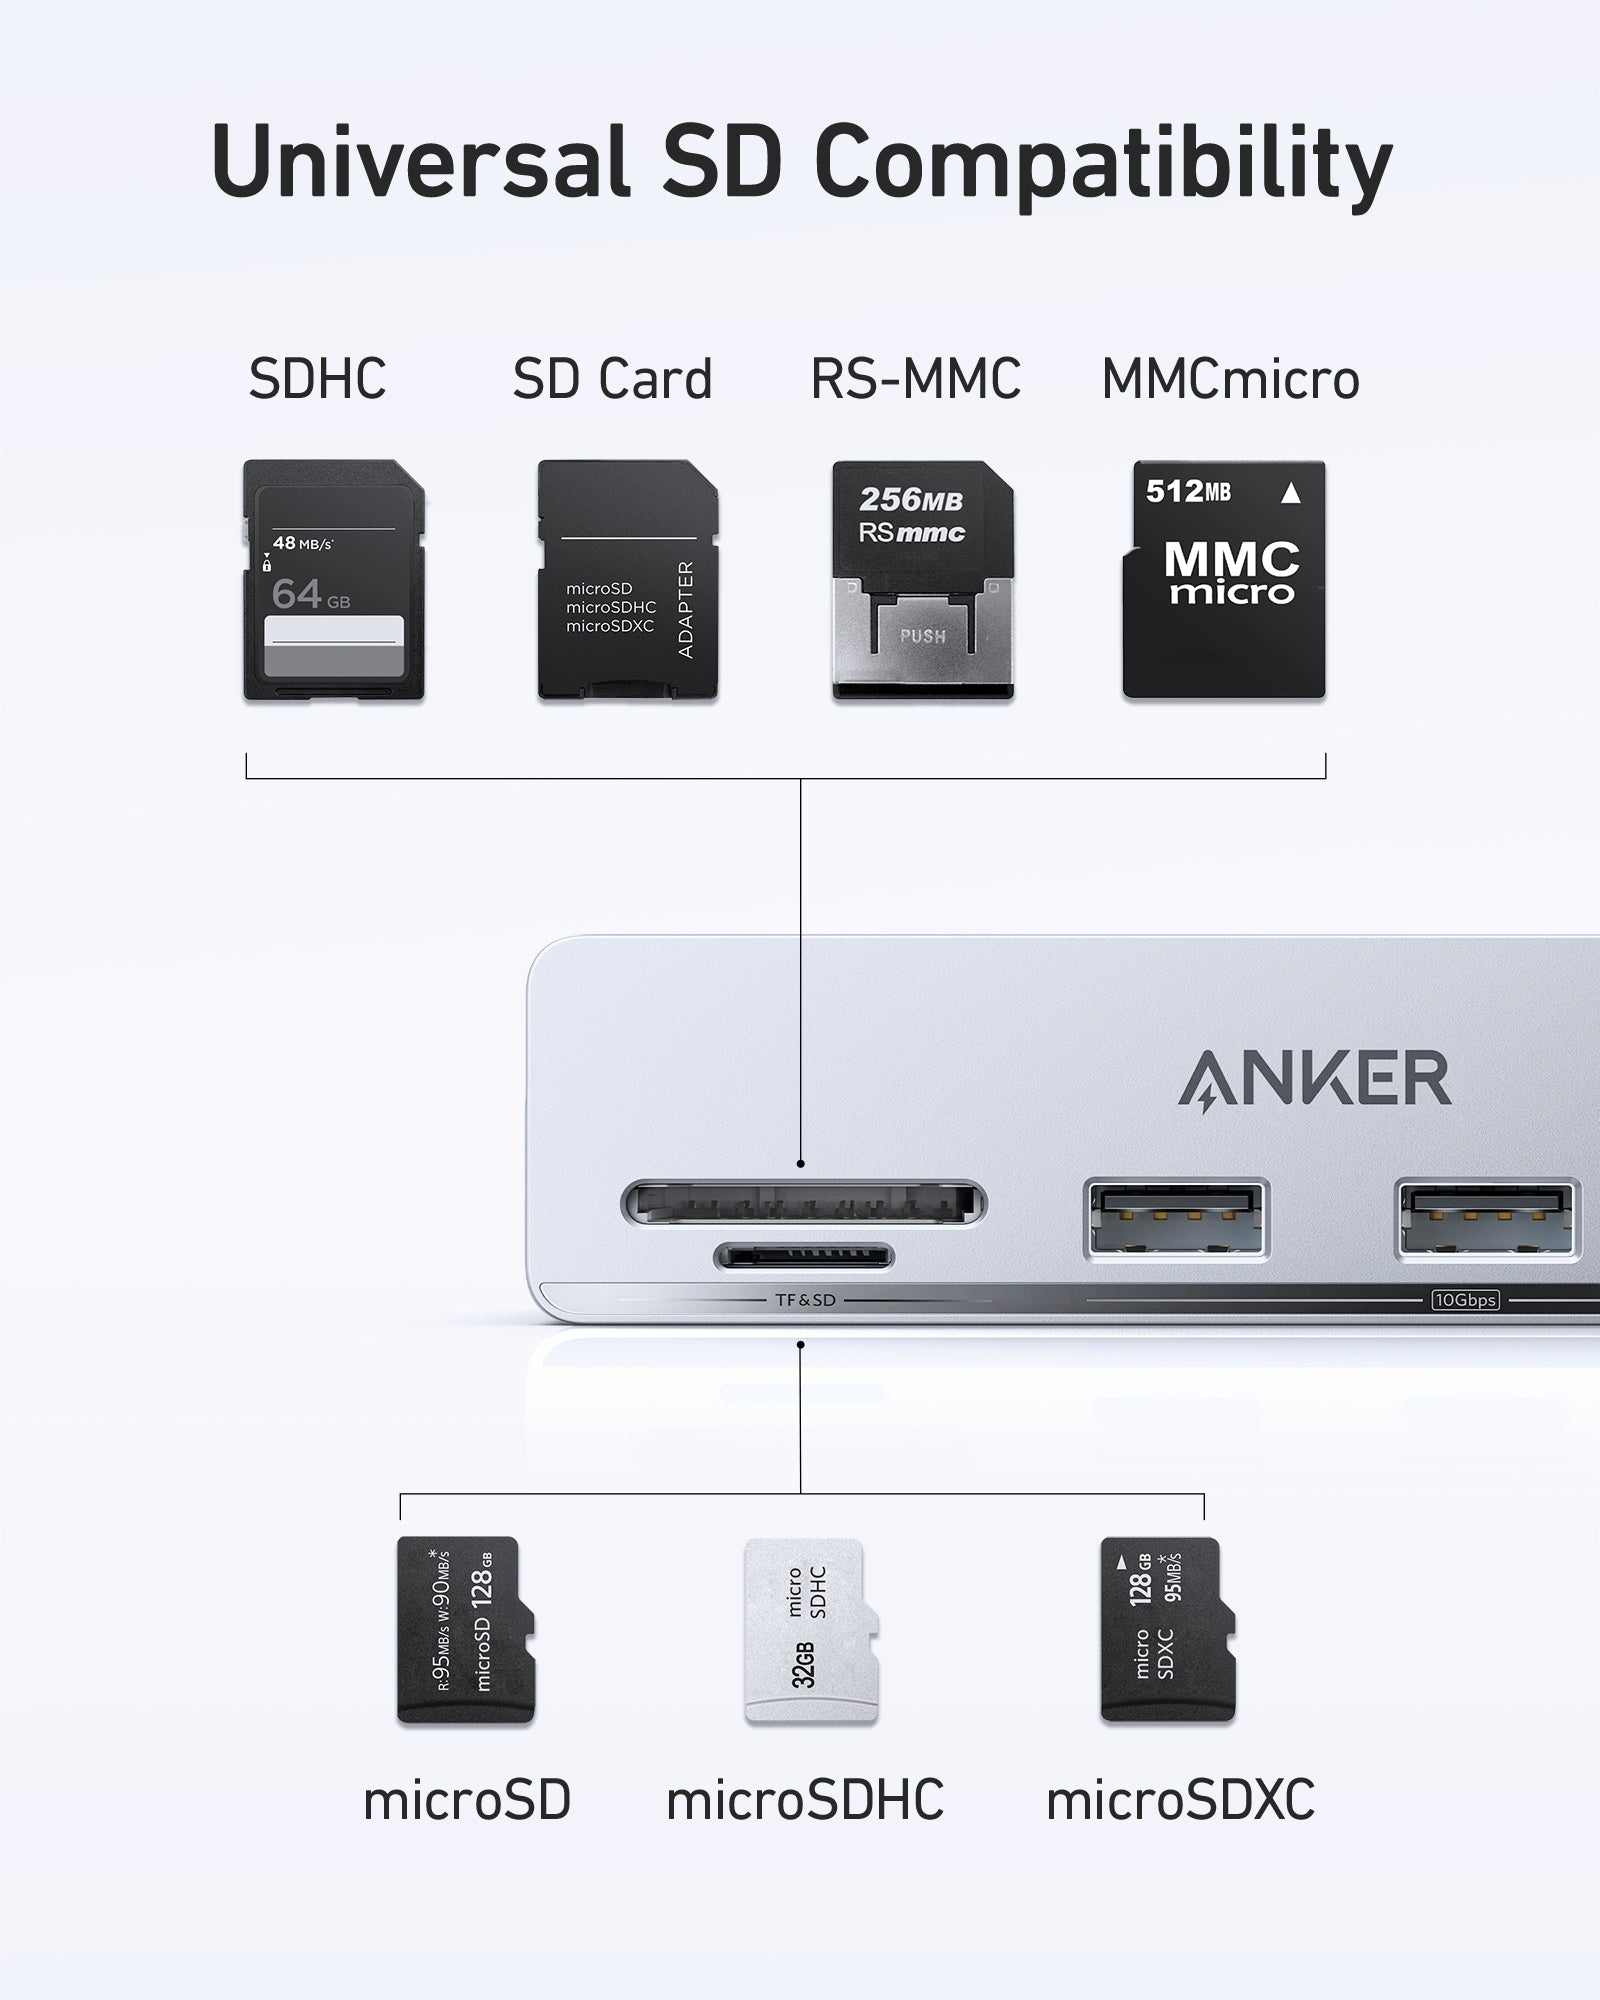 10Gbps Minisopuru iMac USB Hub For 24-inch Accessories【Silver】